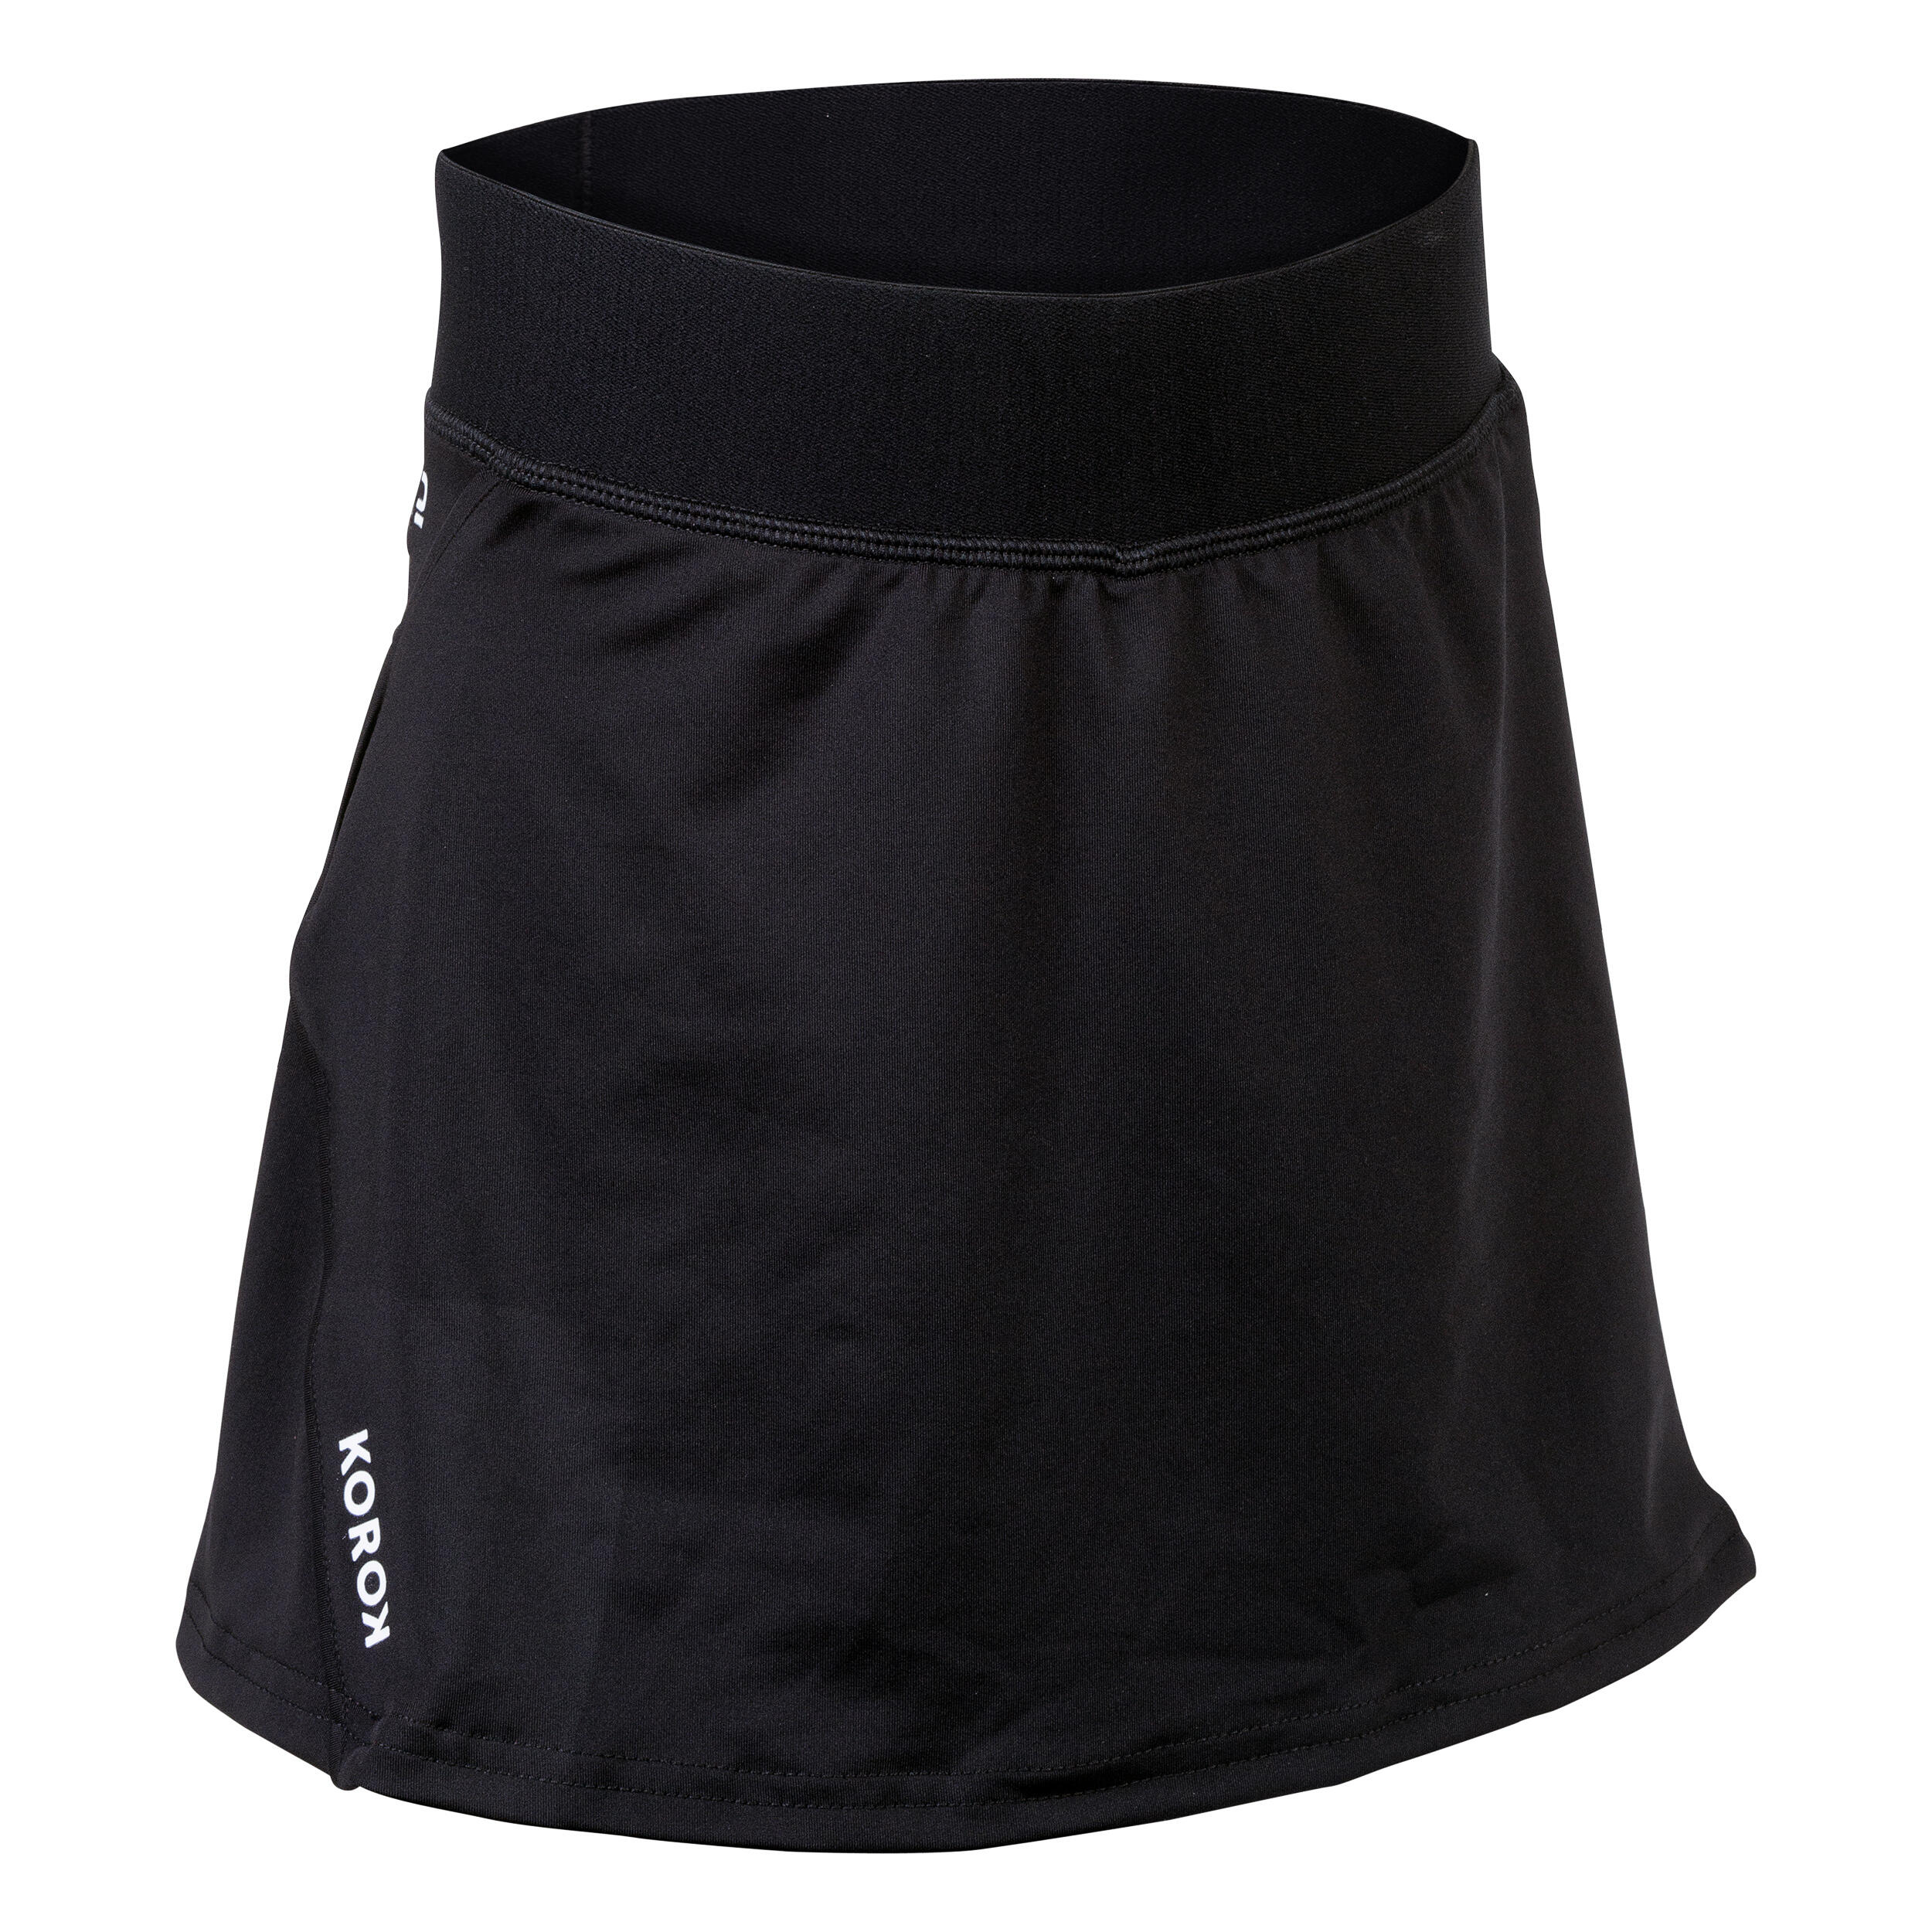 KOROK Girls' High-Intensity Field Hockey Skirt FH900 - Black